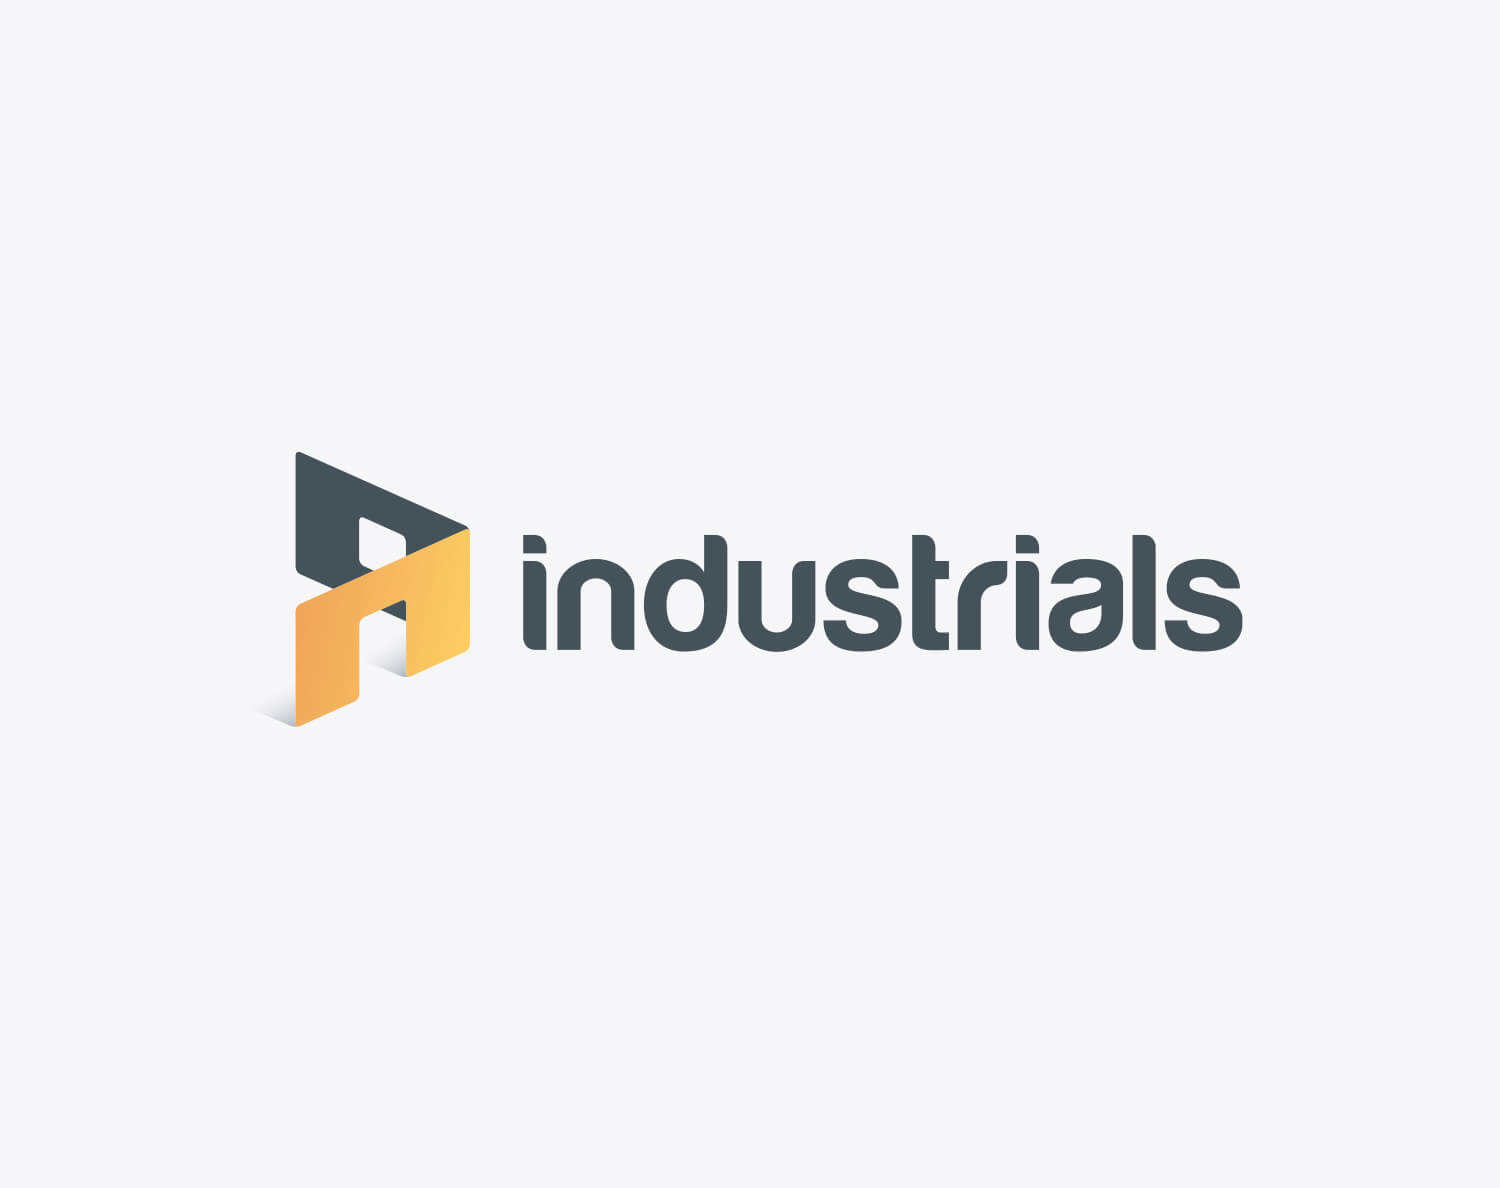 Brand identity/logo design for Multi-let Industrial REIT - Industrials.co.uk